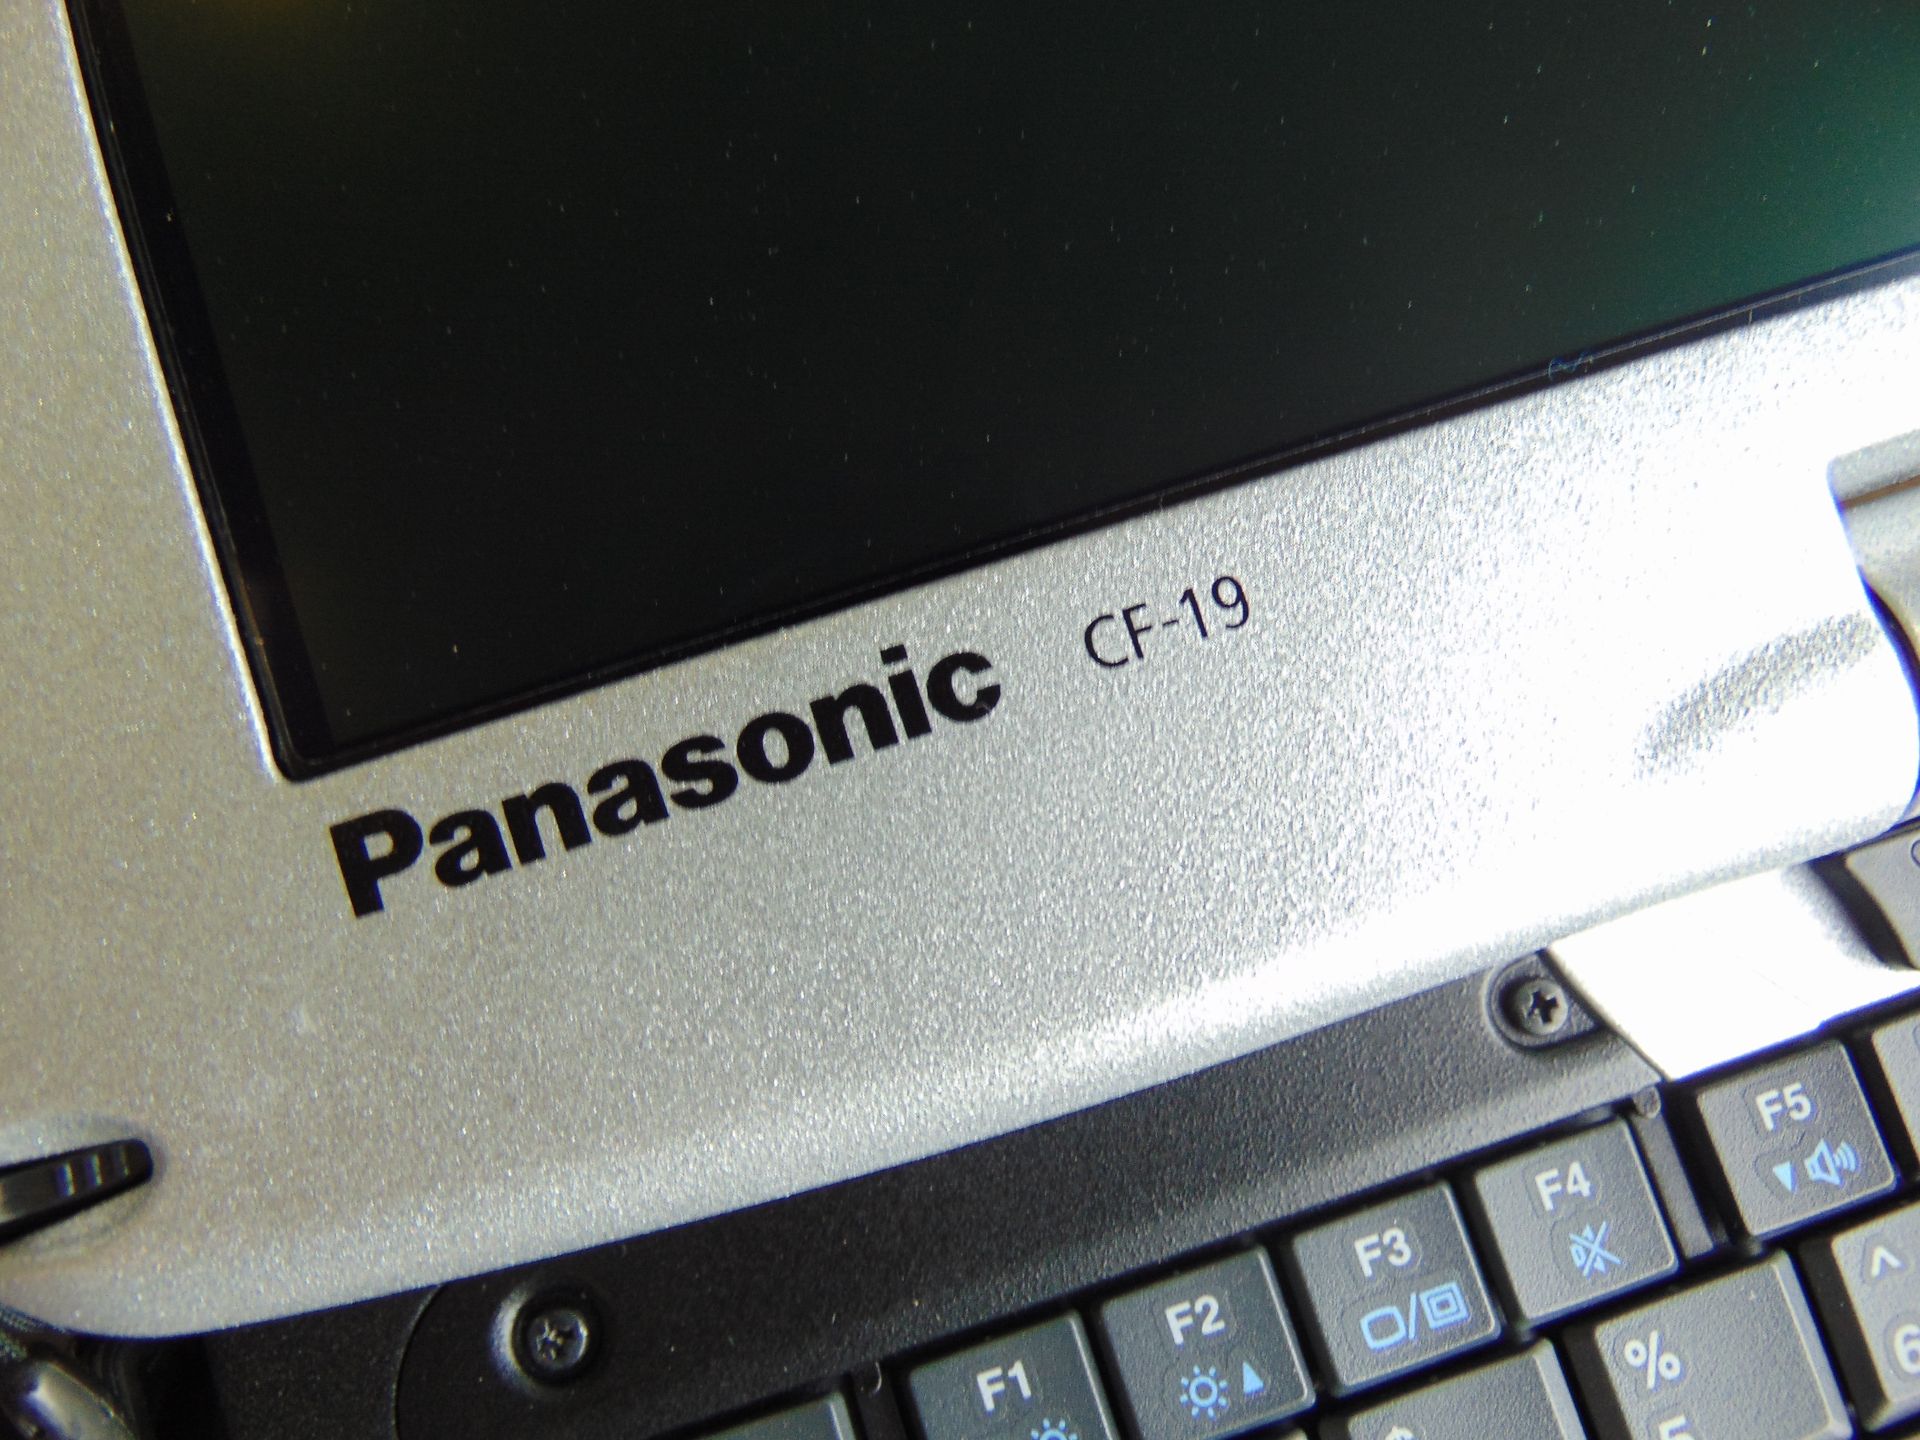 Panasonic CF-19 Toughbook Laptop - Image 3 of 13